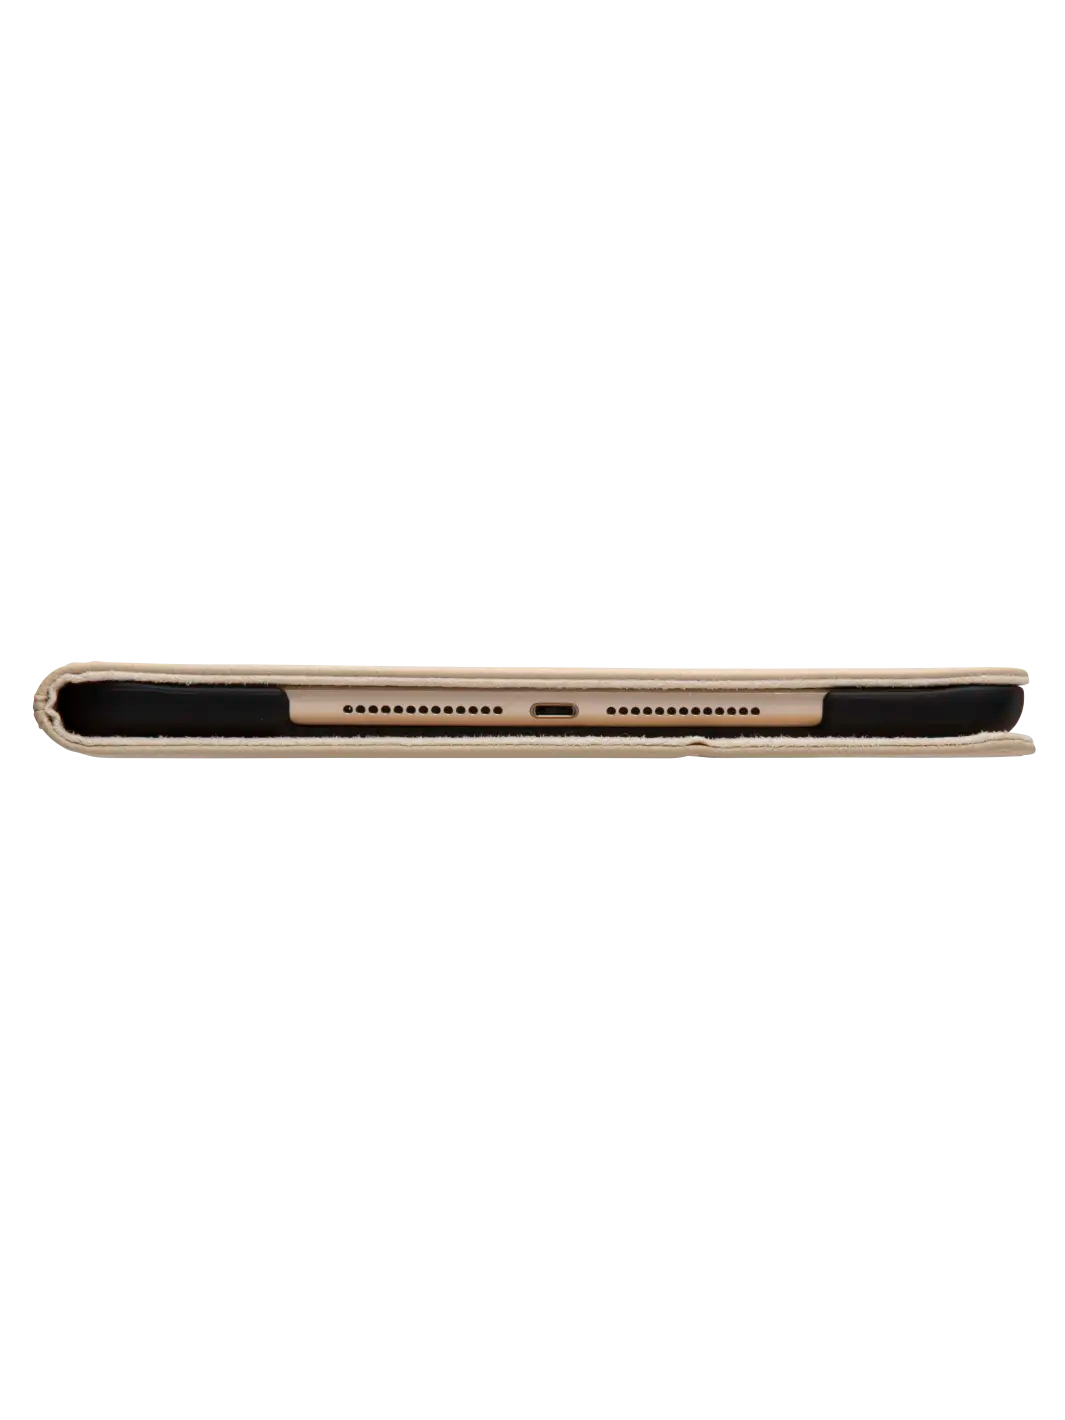 Tokyo Saffiano Sahara Sand iPad 10.2" (7 8th Gen) iPad Cases